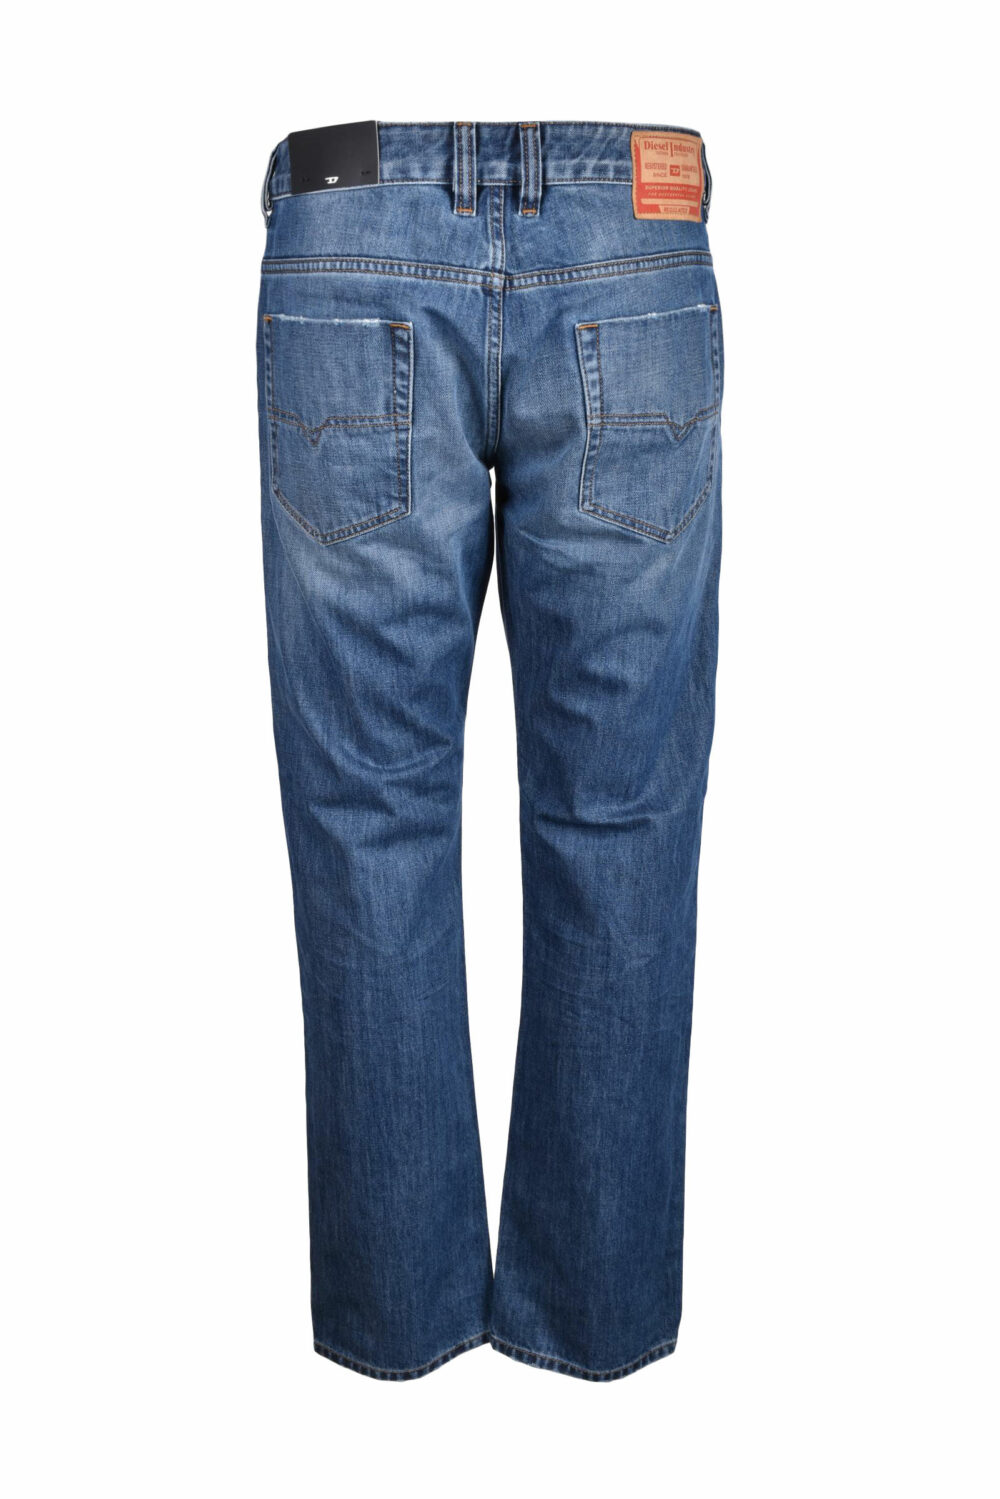 Jeans Diesel jeans Denim - Foto 2